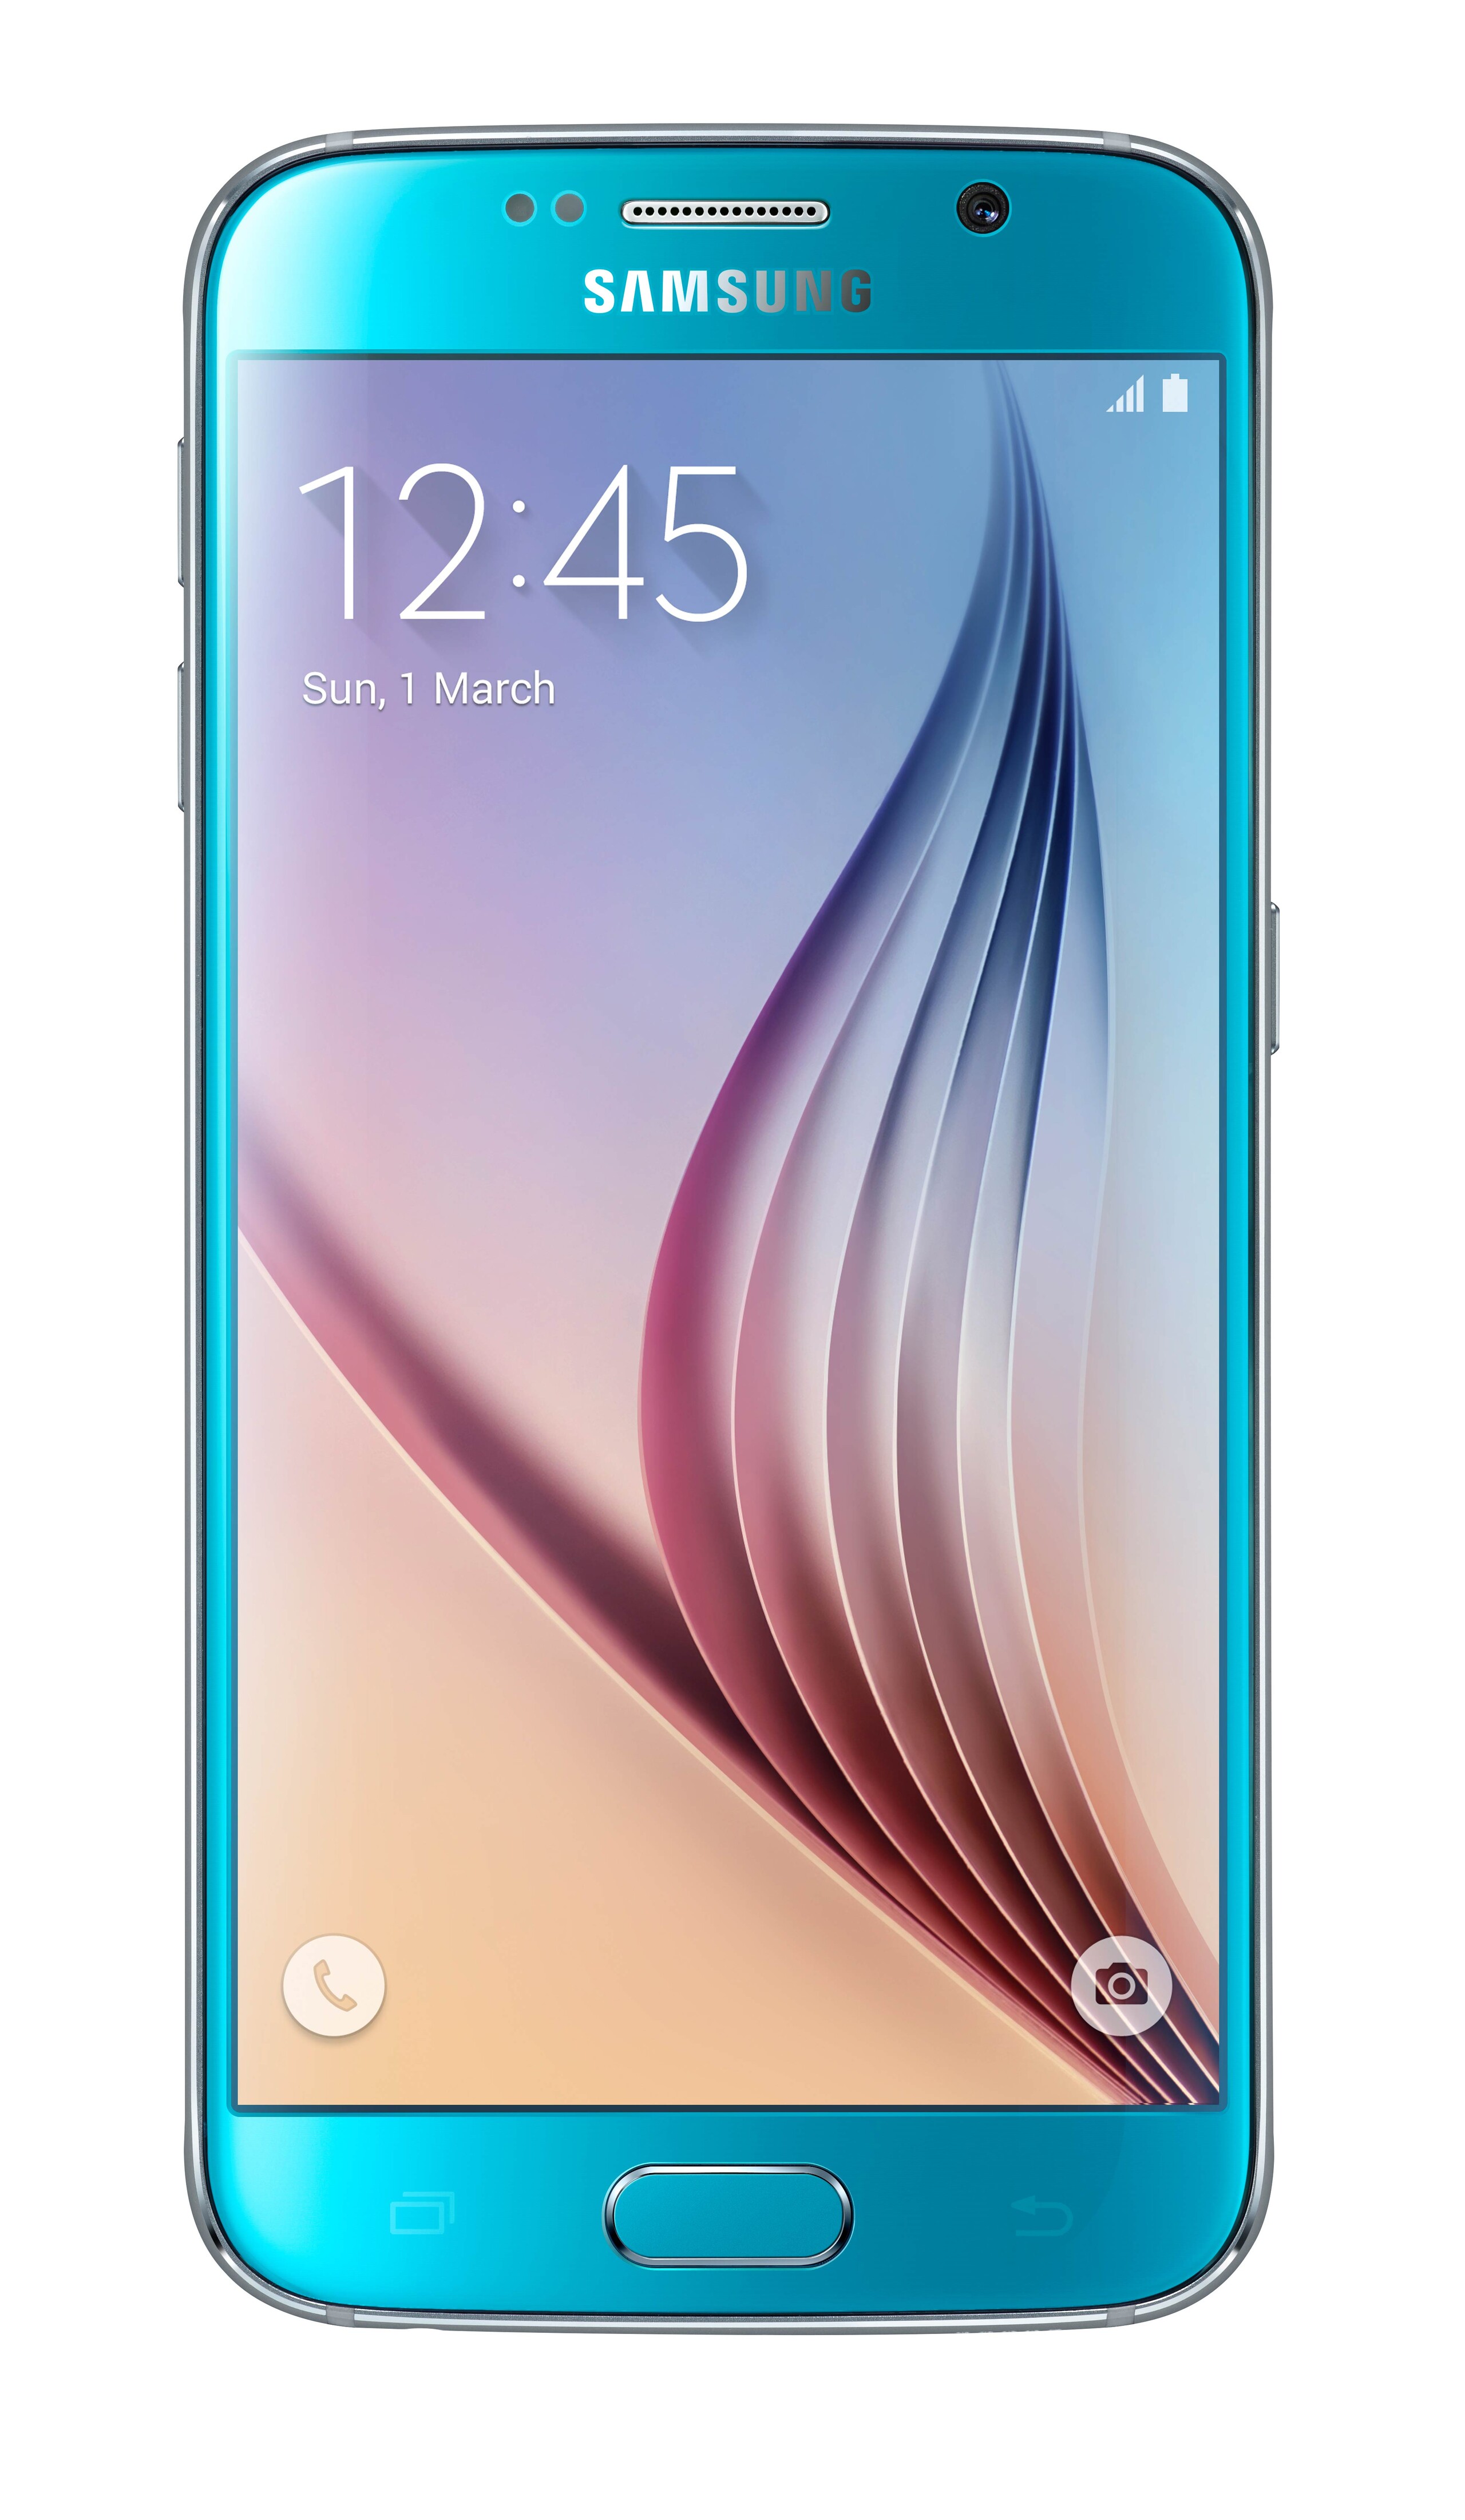 Самсунг телефон какая цена. Samsung Galaxy s6 32gb. Samsung Galaxy s6 g920f. Самсунг SM-g920f. Samsung Galaxy s6 SM-g920.